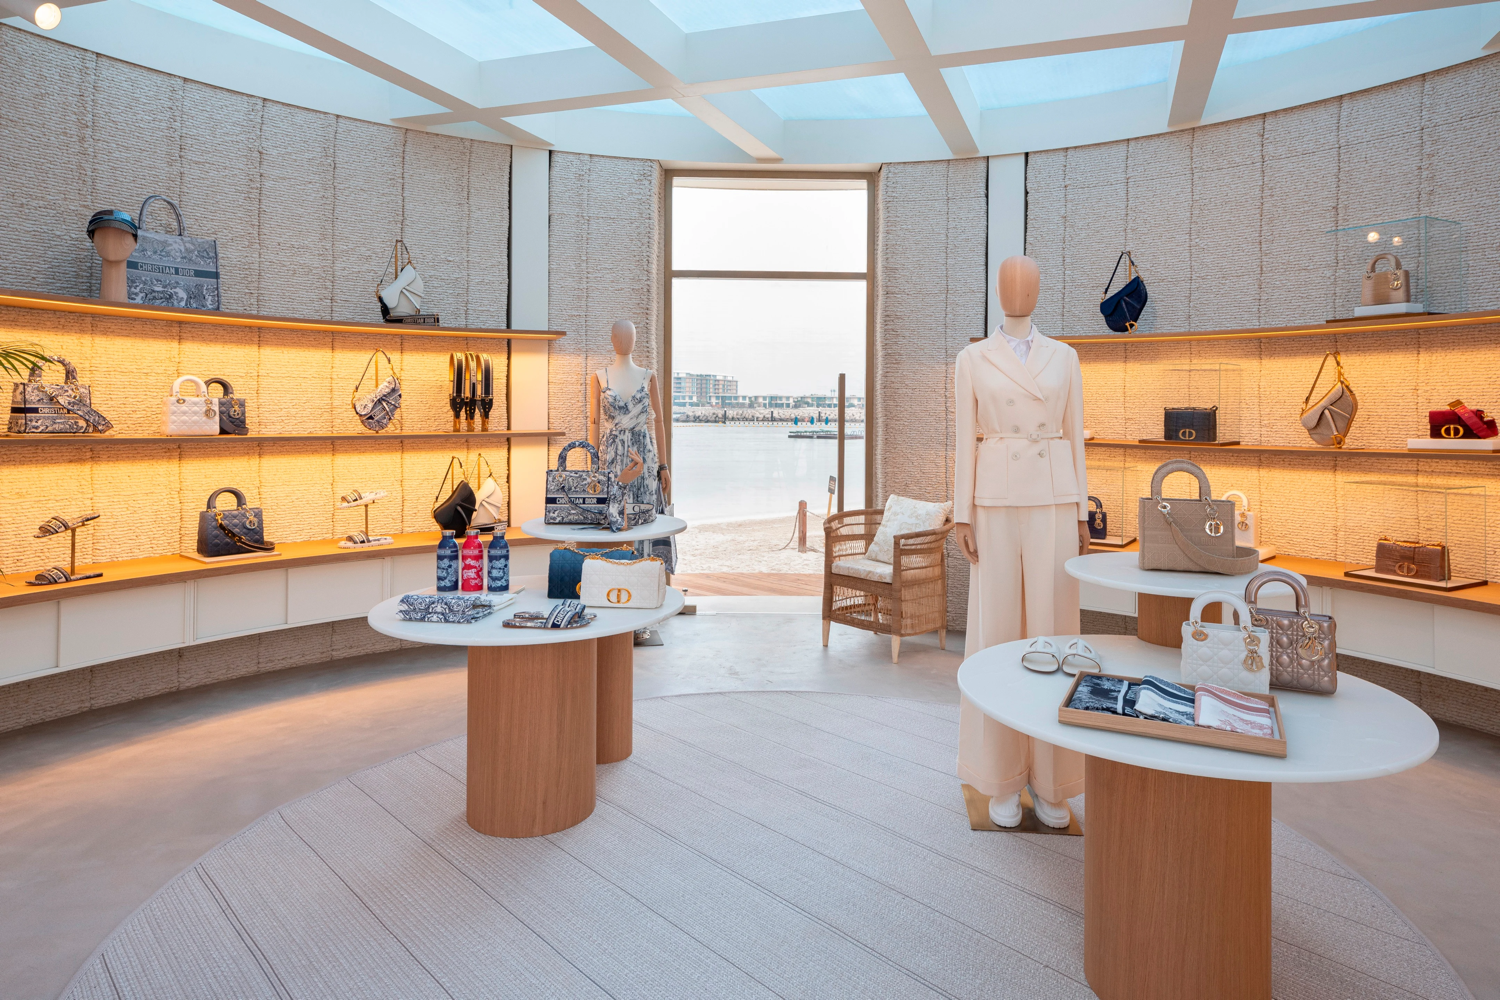 Dior reopens Dubai popup store  Luxury  Gulf News